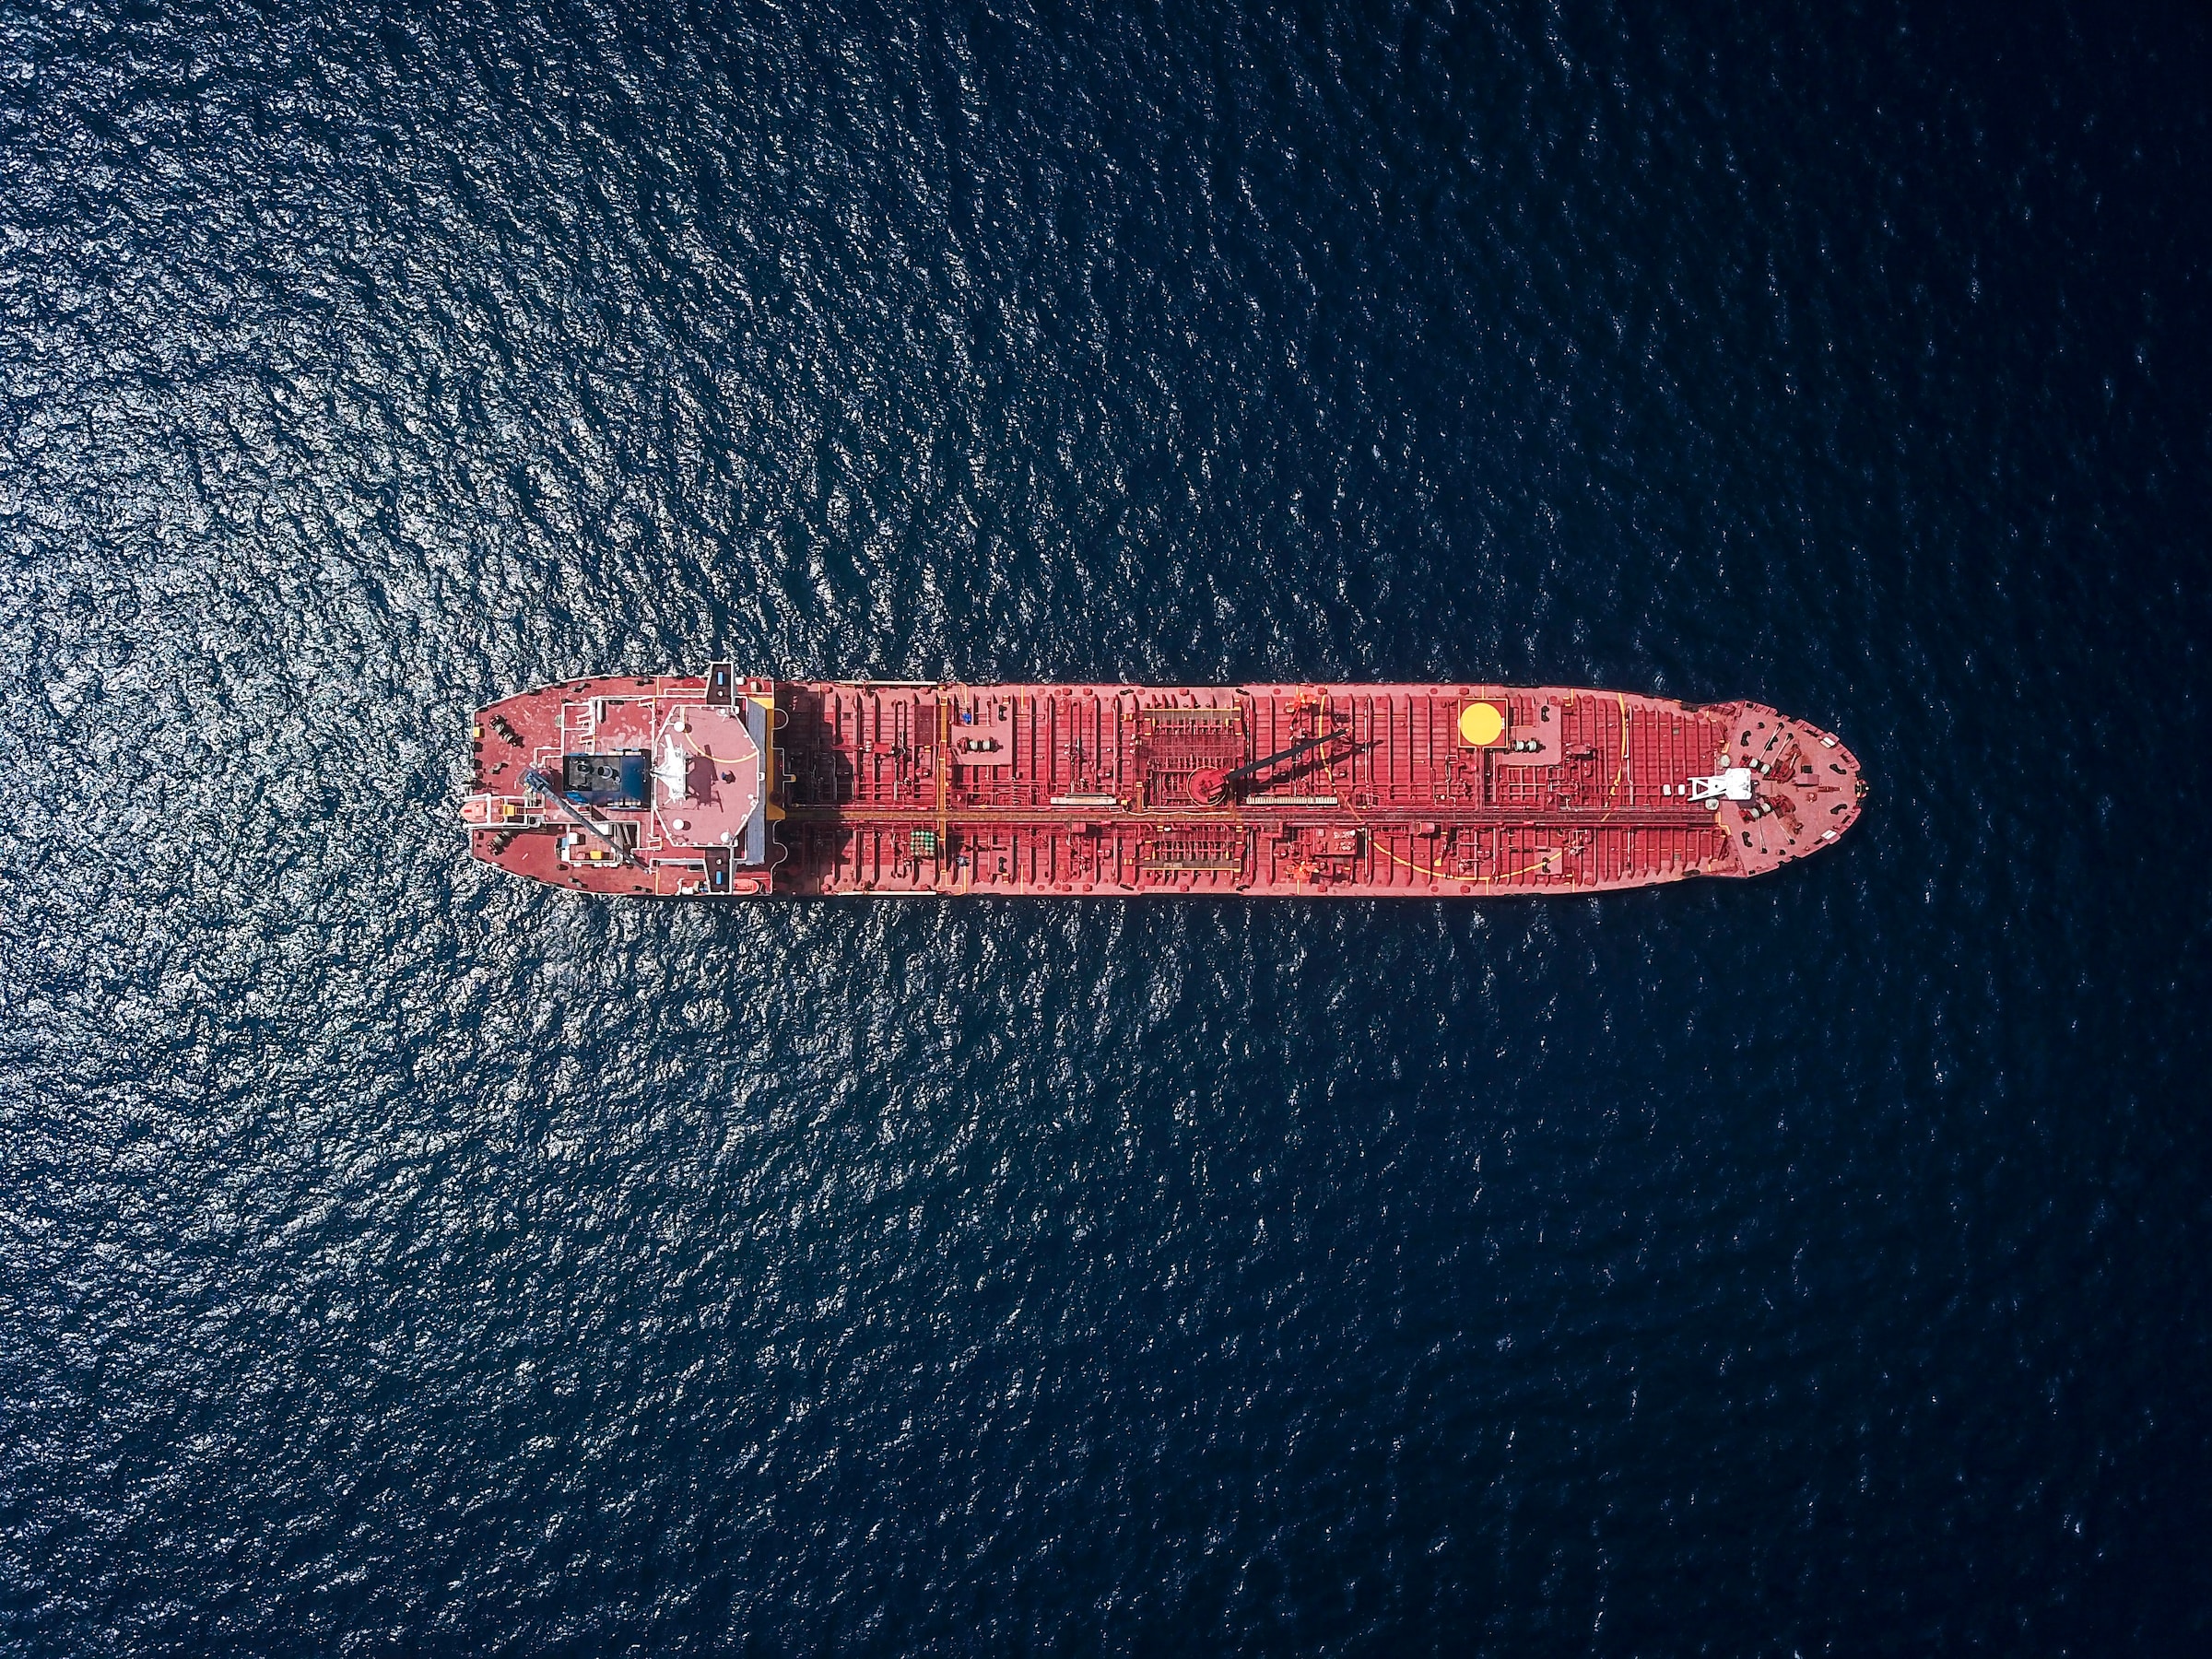 Tanker on an ocean.